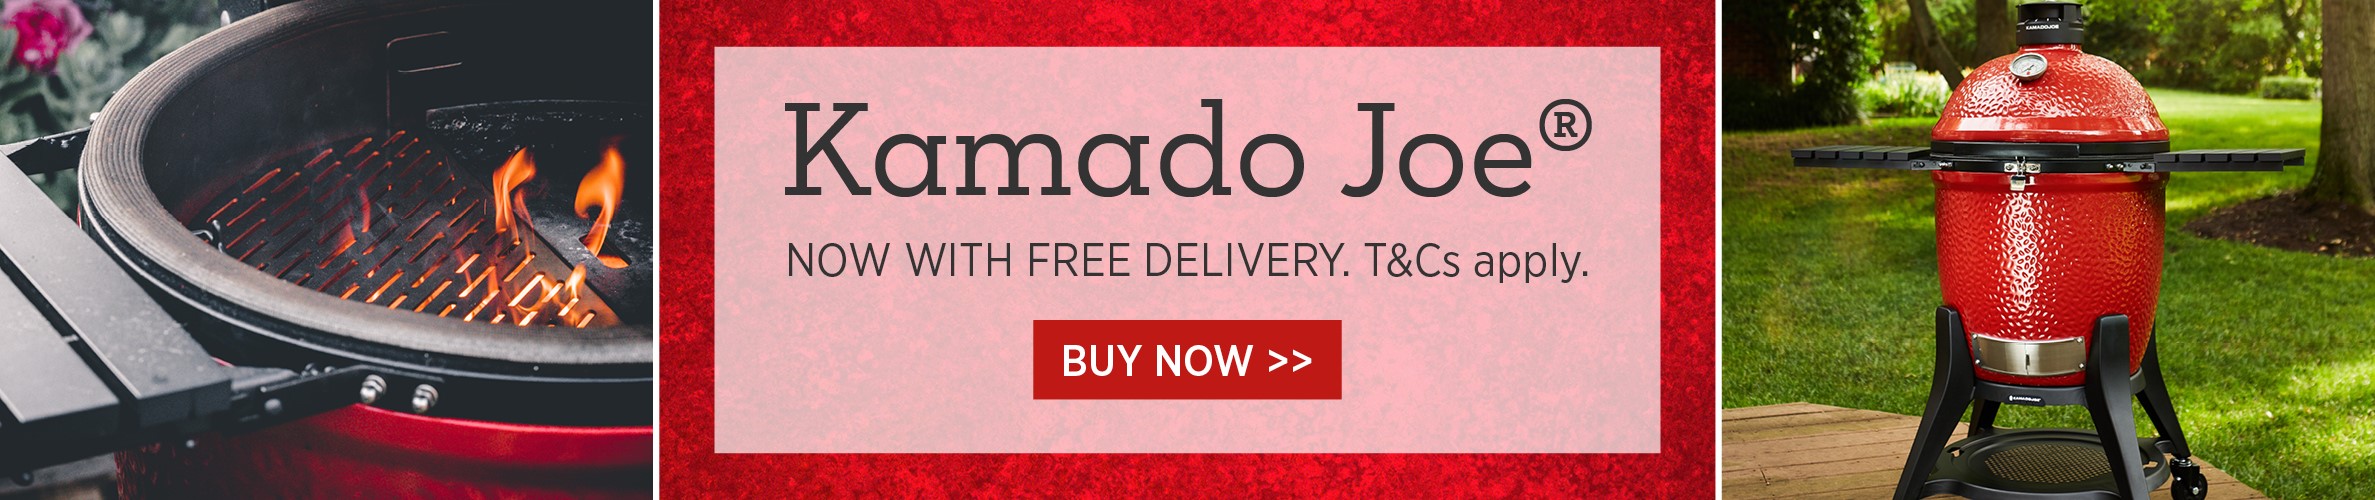 Kamado Joe Free Delivery 